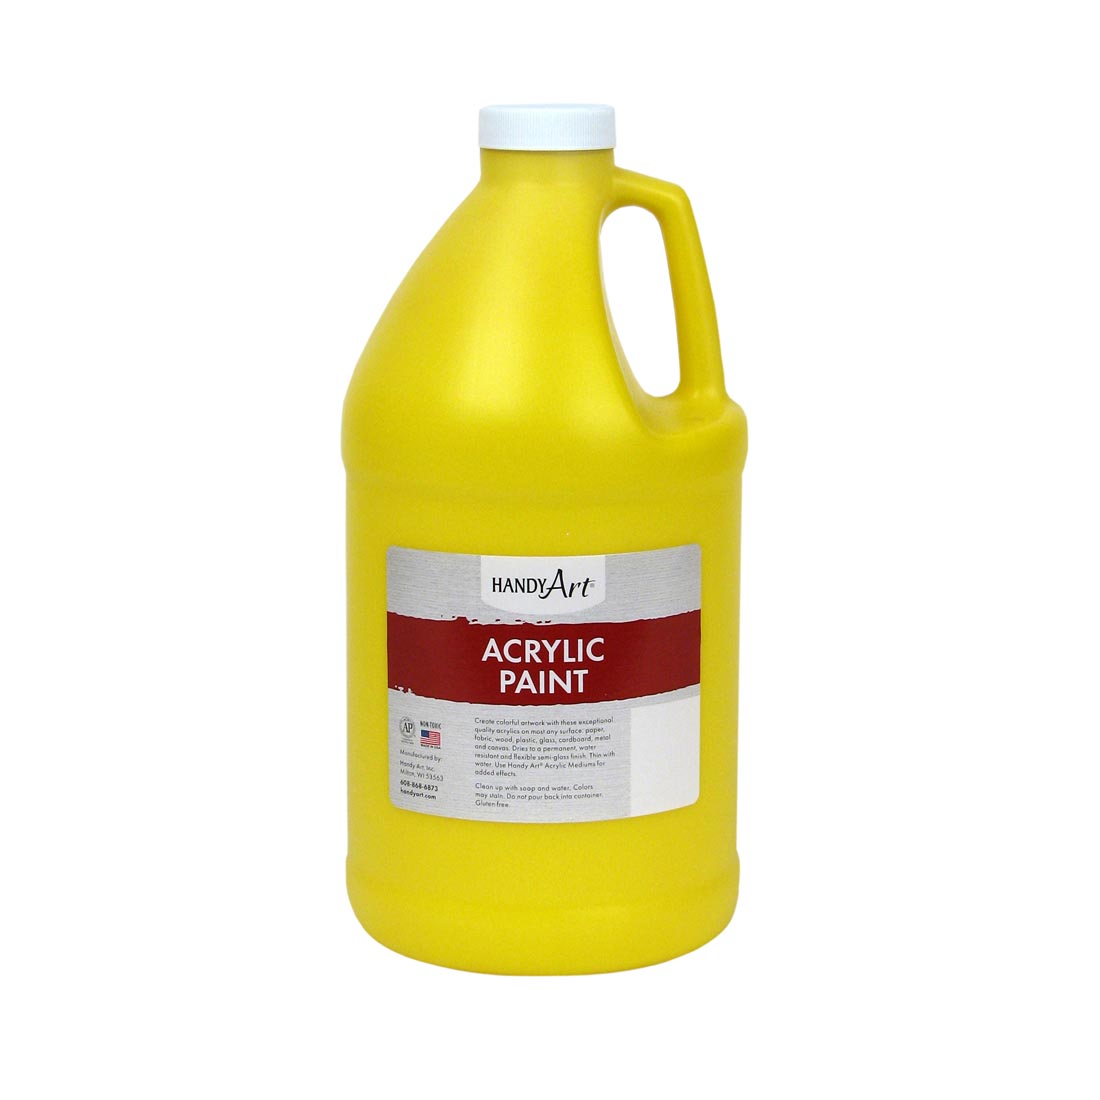 1/2 Gallon of Chrome Yellow Handy Art Acrylic Paint